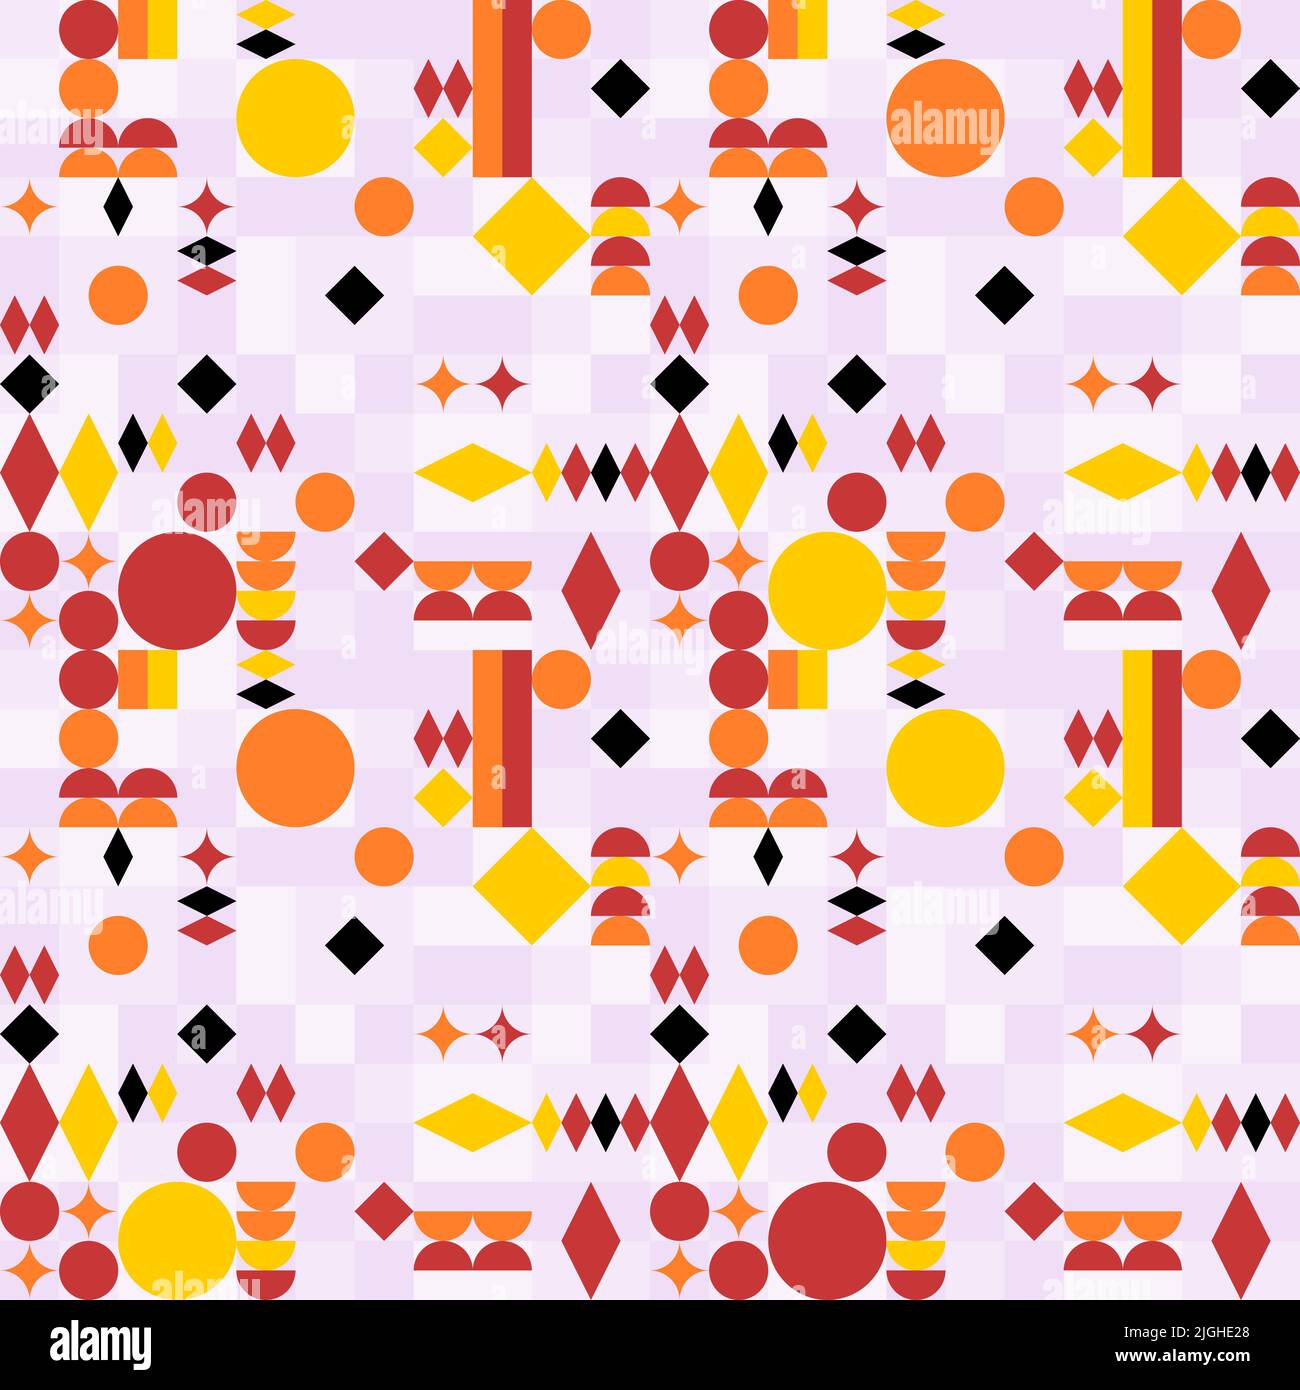 Bauhaus mid-century pattern. Seamless geometric abstract pattern. Vector geometric shapes design. Stock Vector